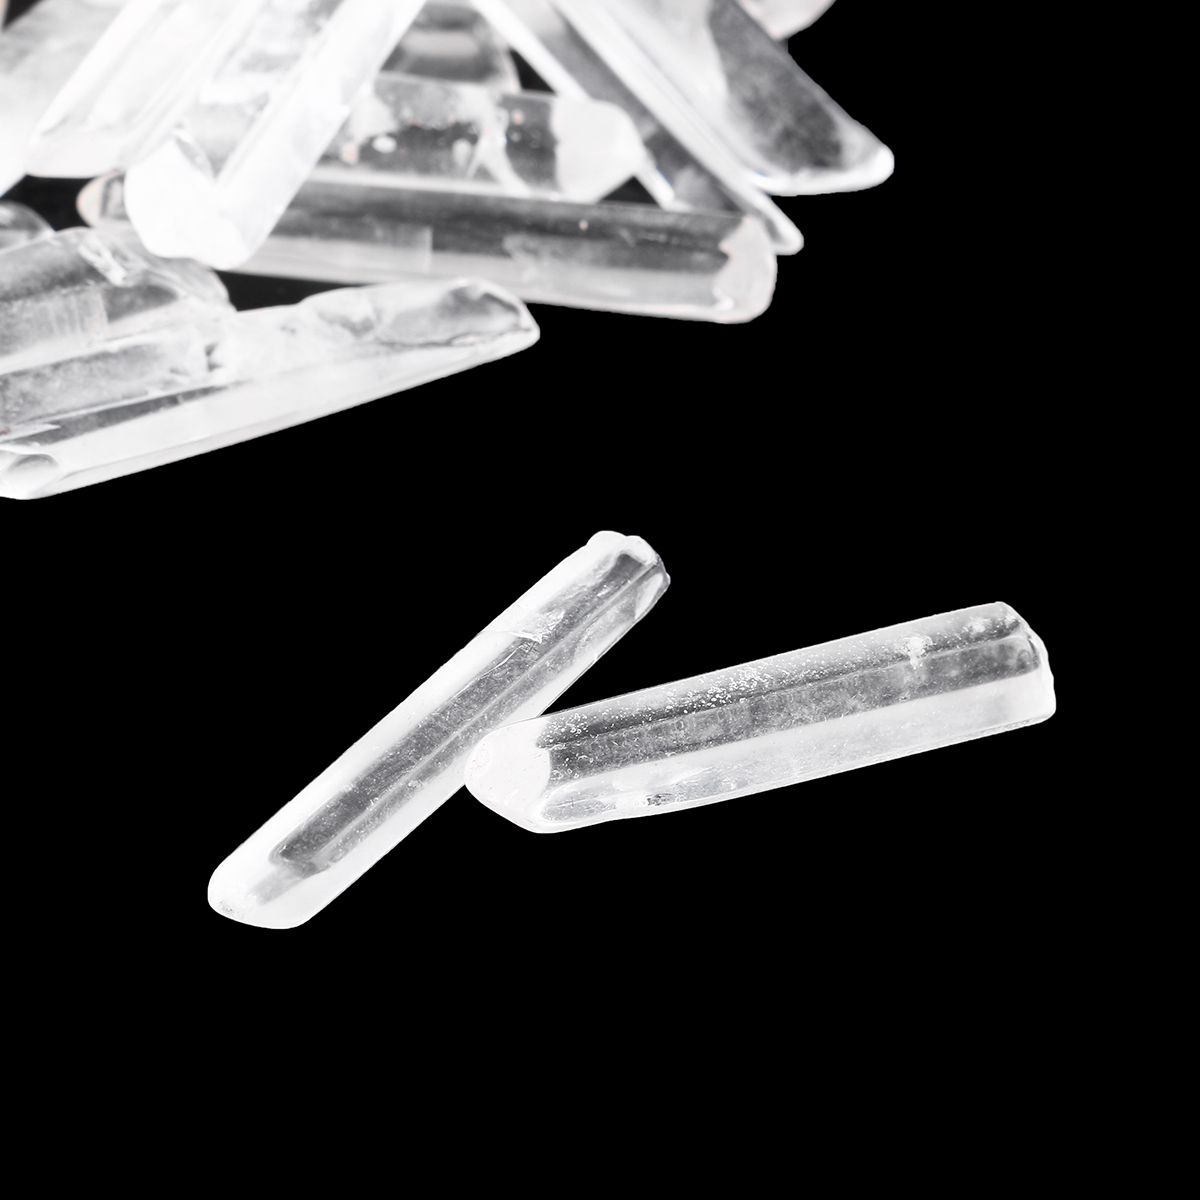 100g-Herkimer-Diamond-Crystal-Quartz-Point-Decorations-1557842